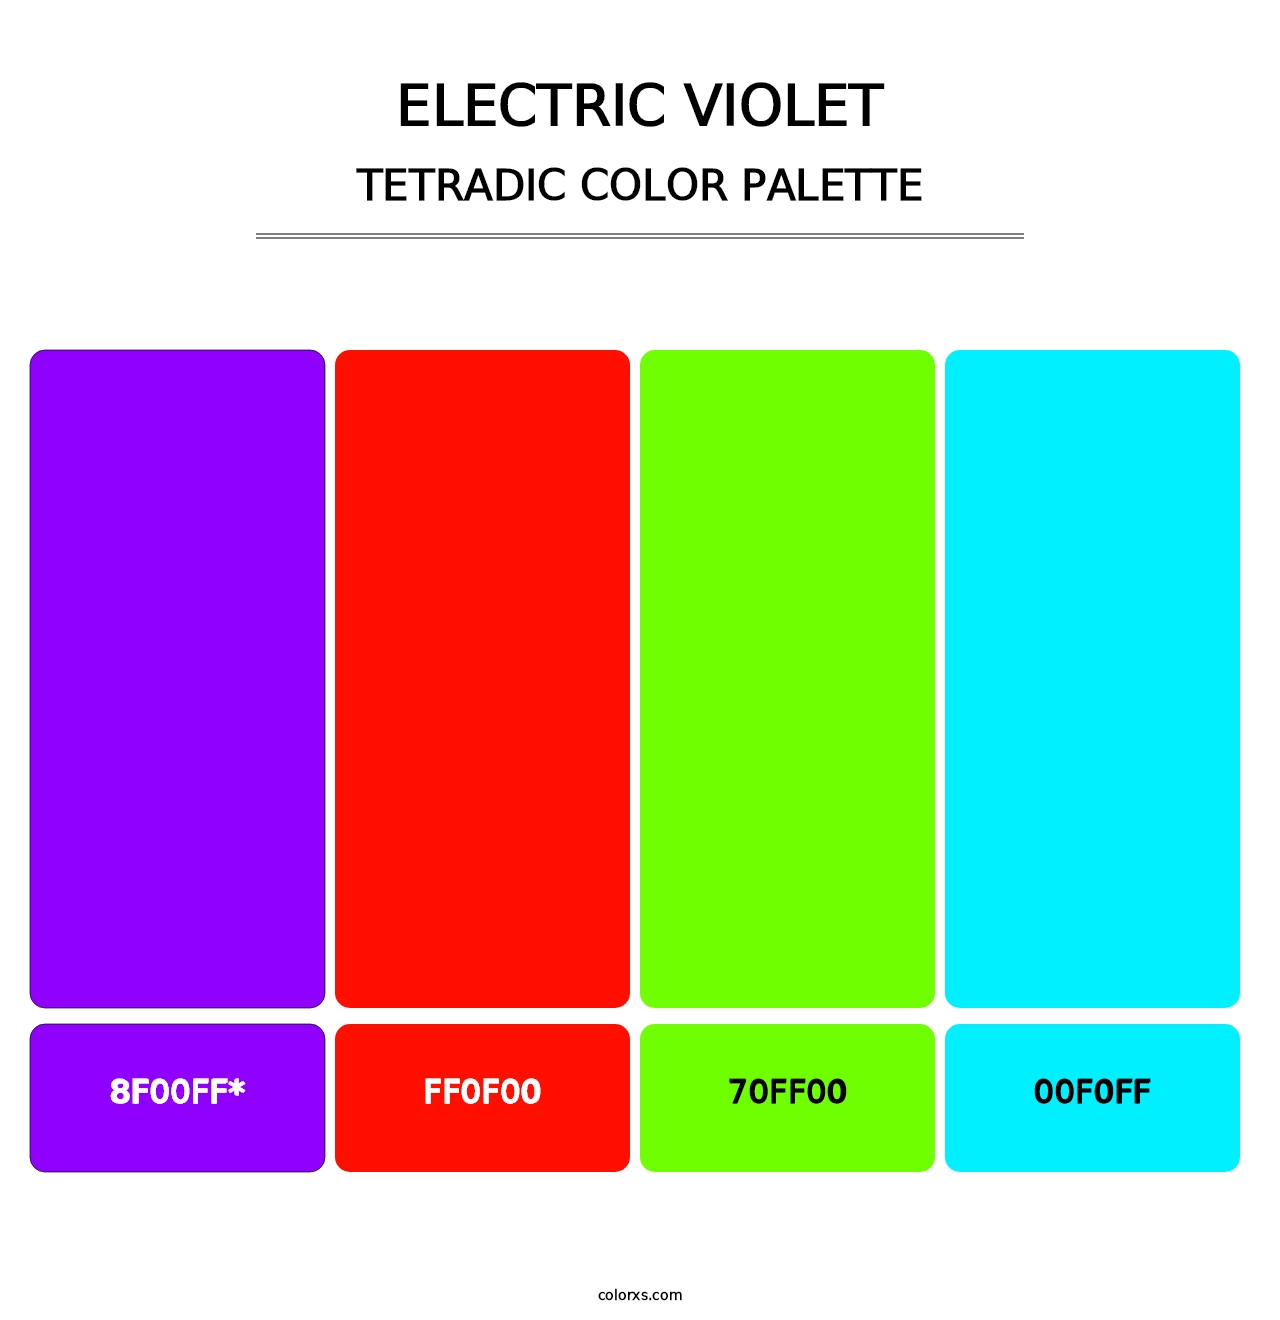 Electric Violet - Tetradic Color Palette